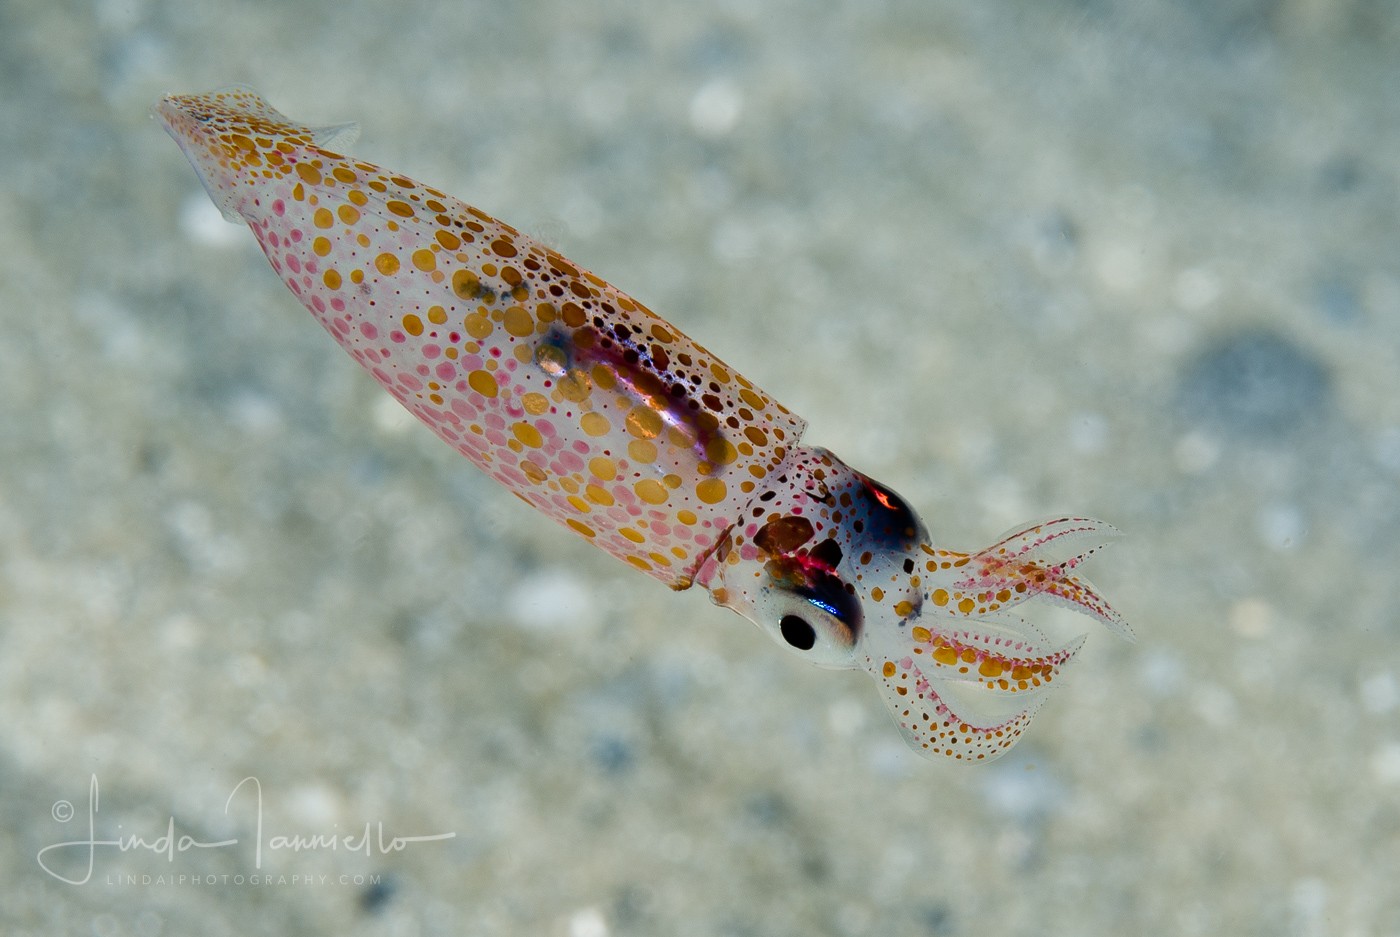 Arrow Squid - Doryteuthis pleii